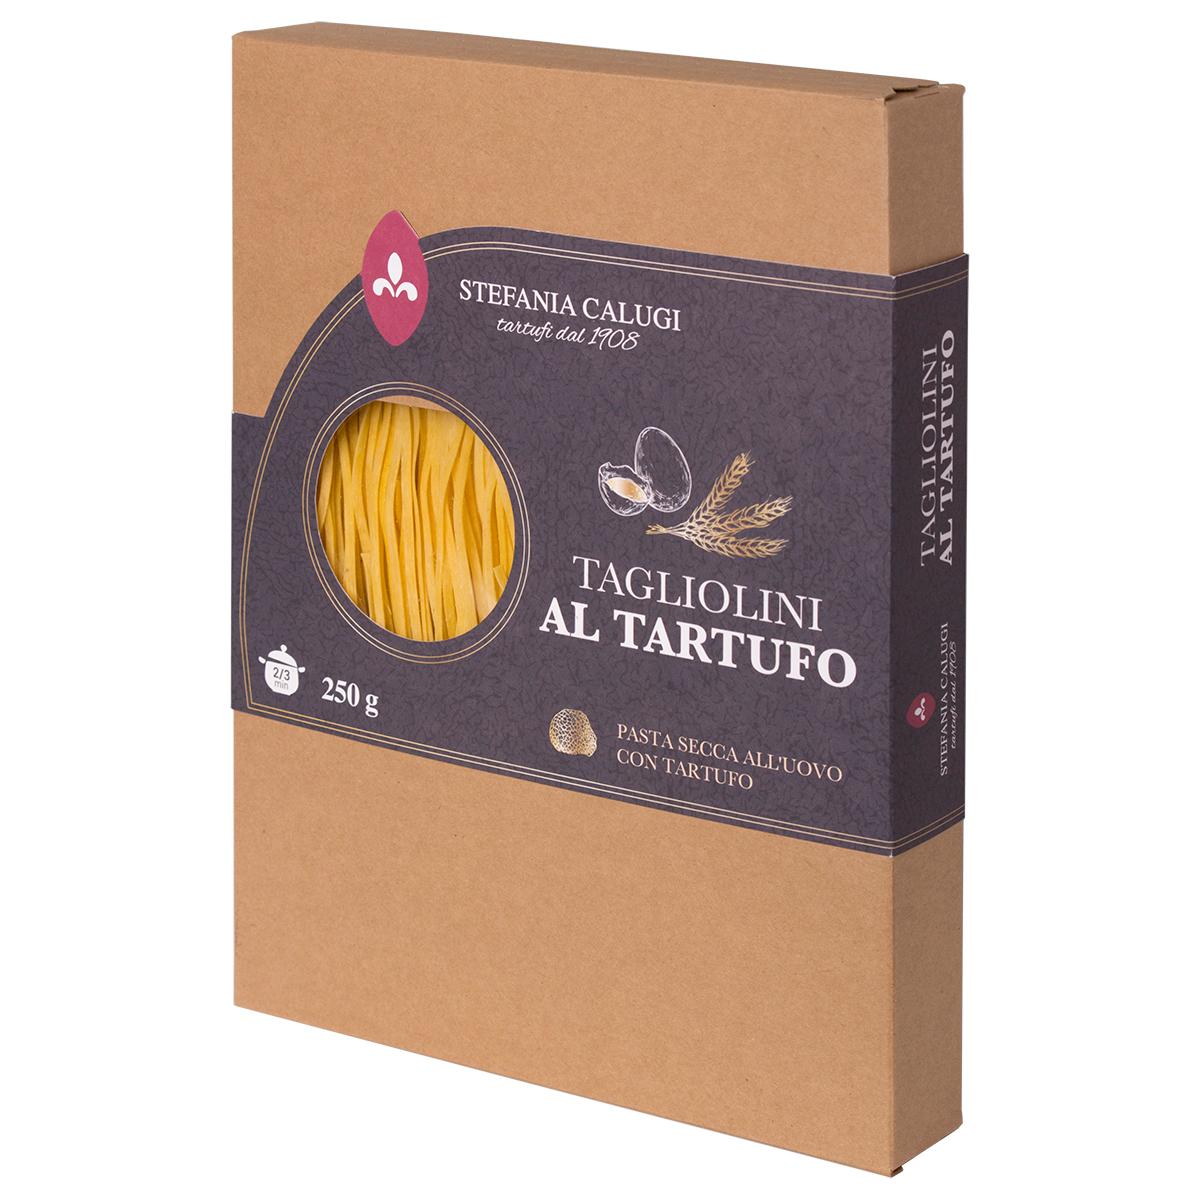 Макароны Stefania Calugi tagliolini al tartufo яичная паста с трюфелем, 250 гр., картон